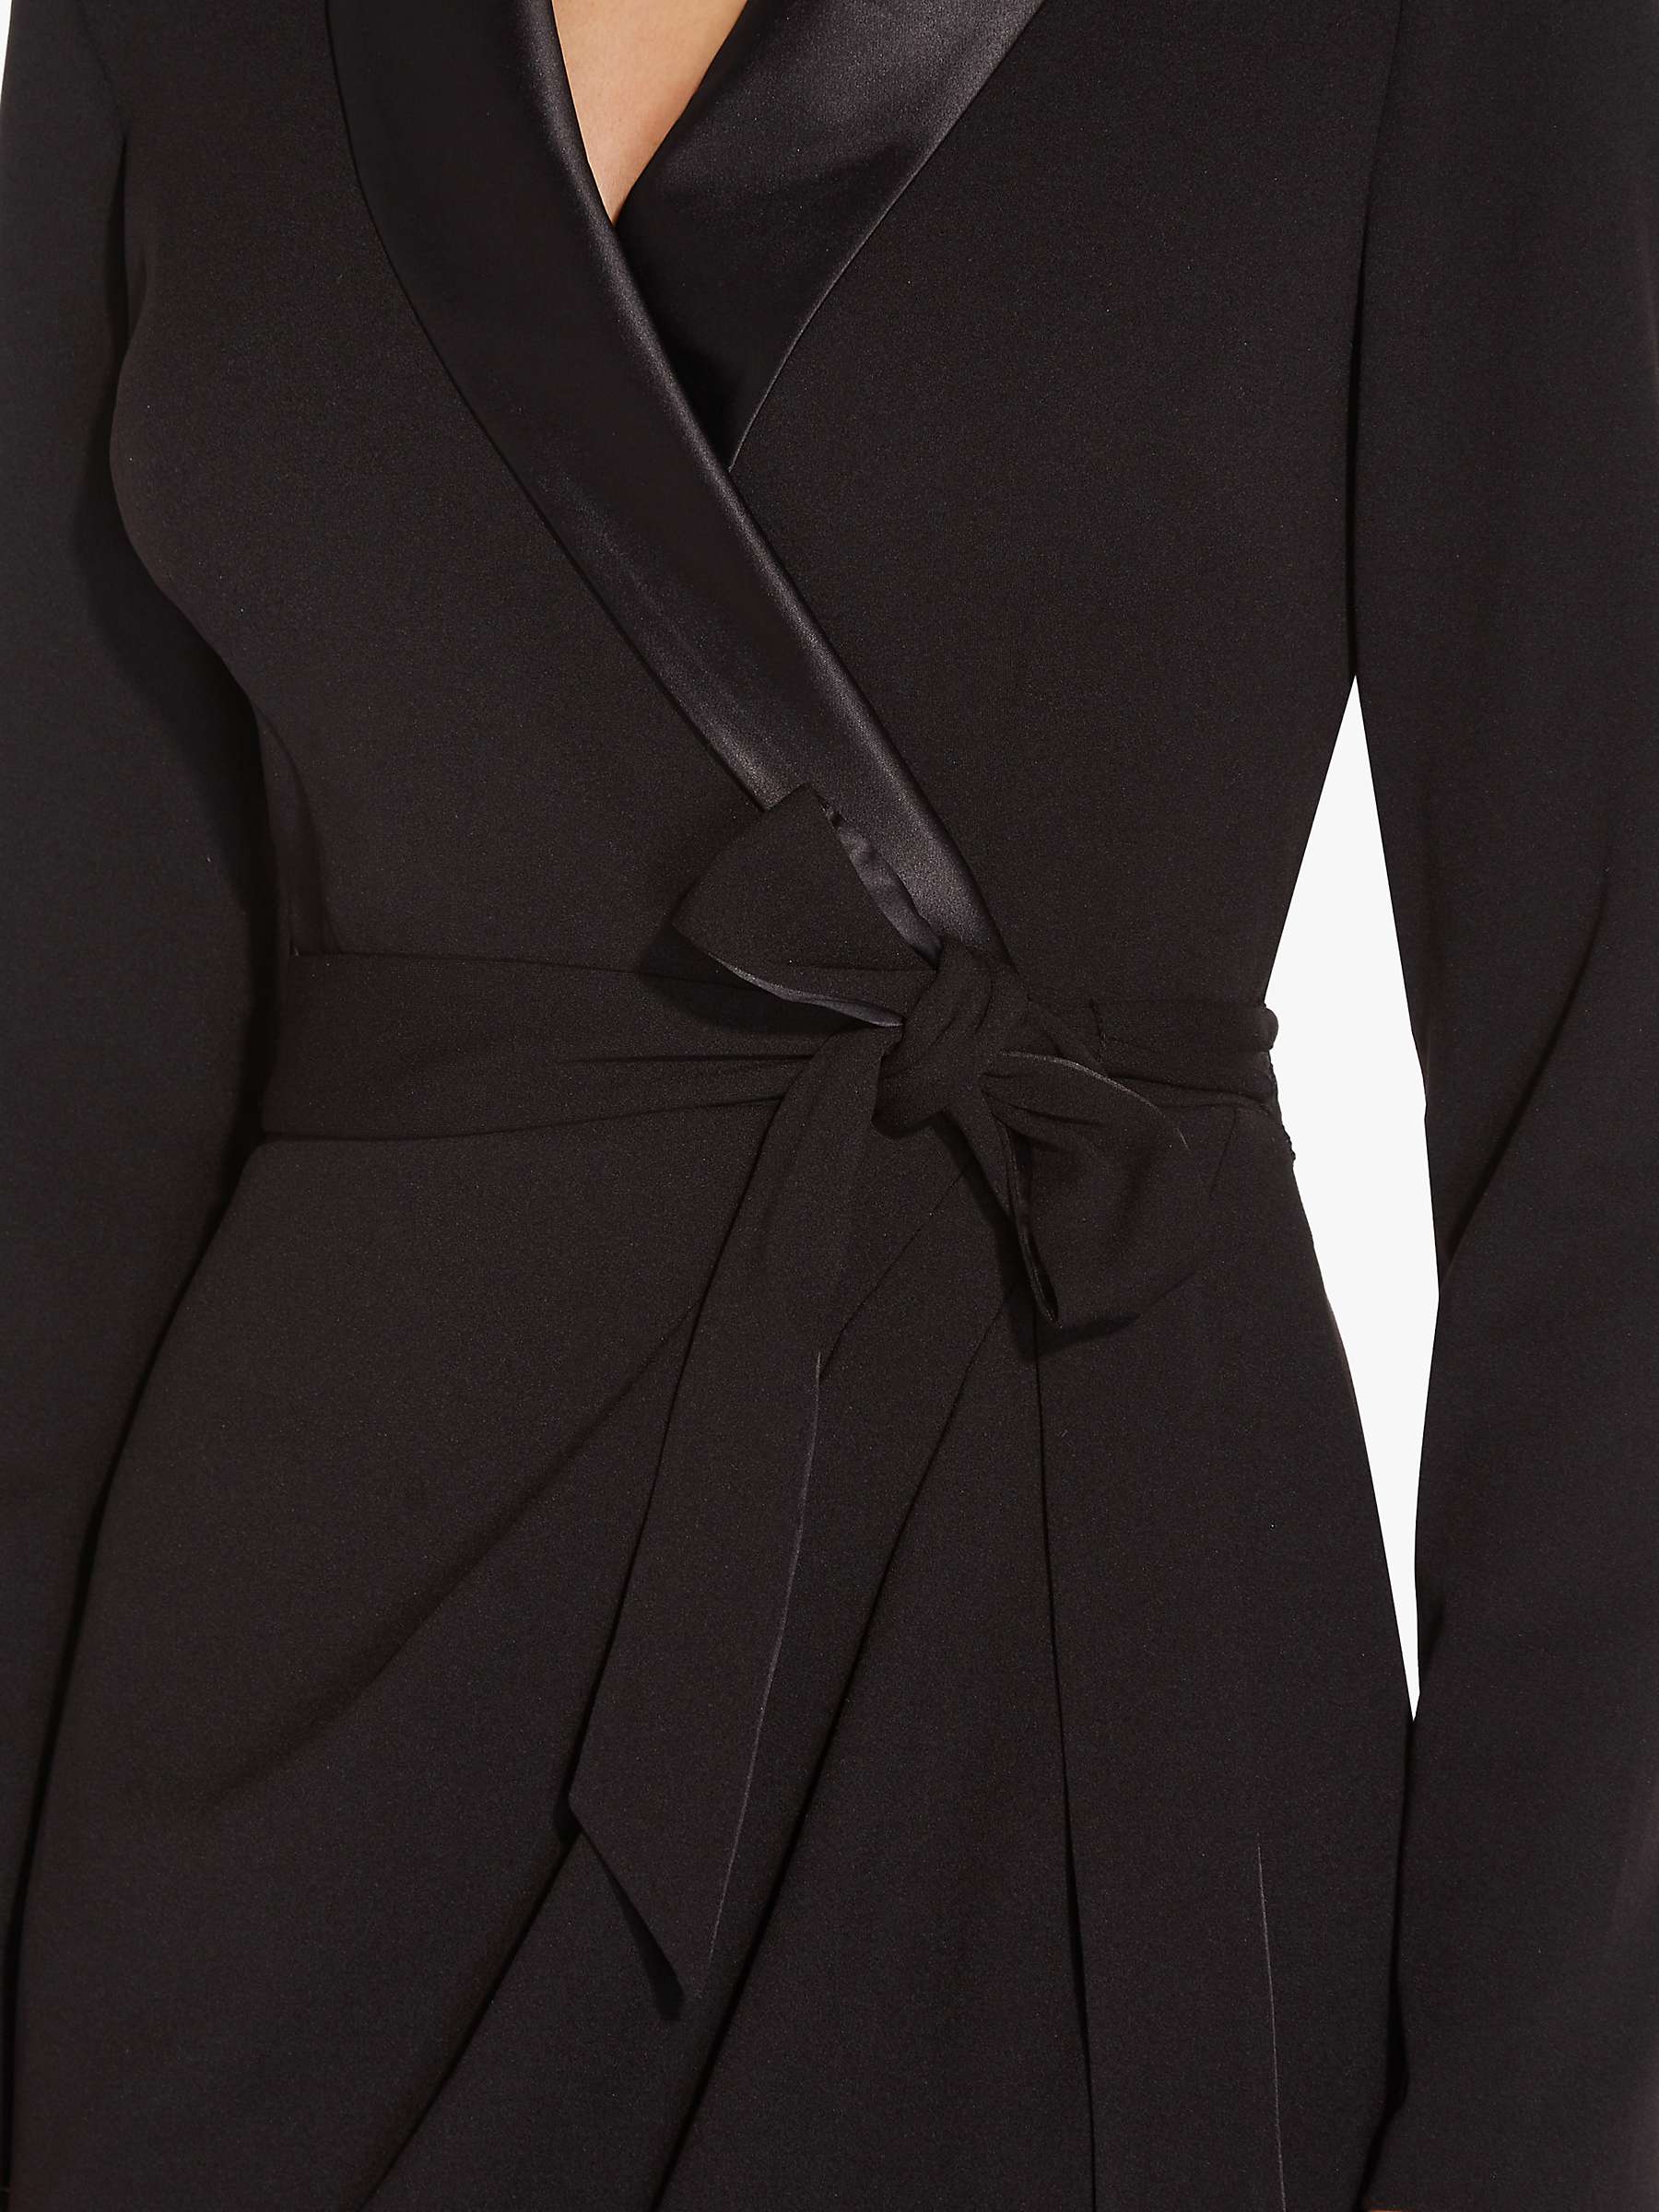 Buy Adrianna Papell Knit Wrap Tuxedo Dress, Black Online at johnlewis.com